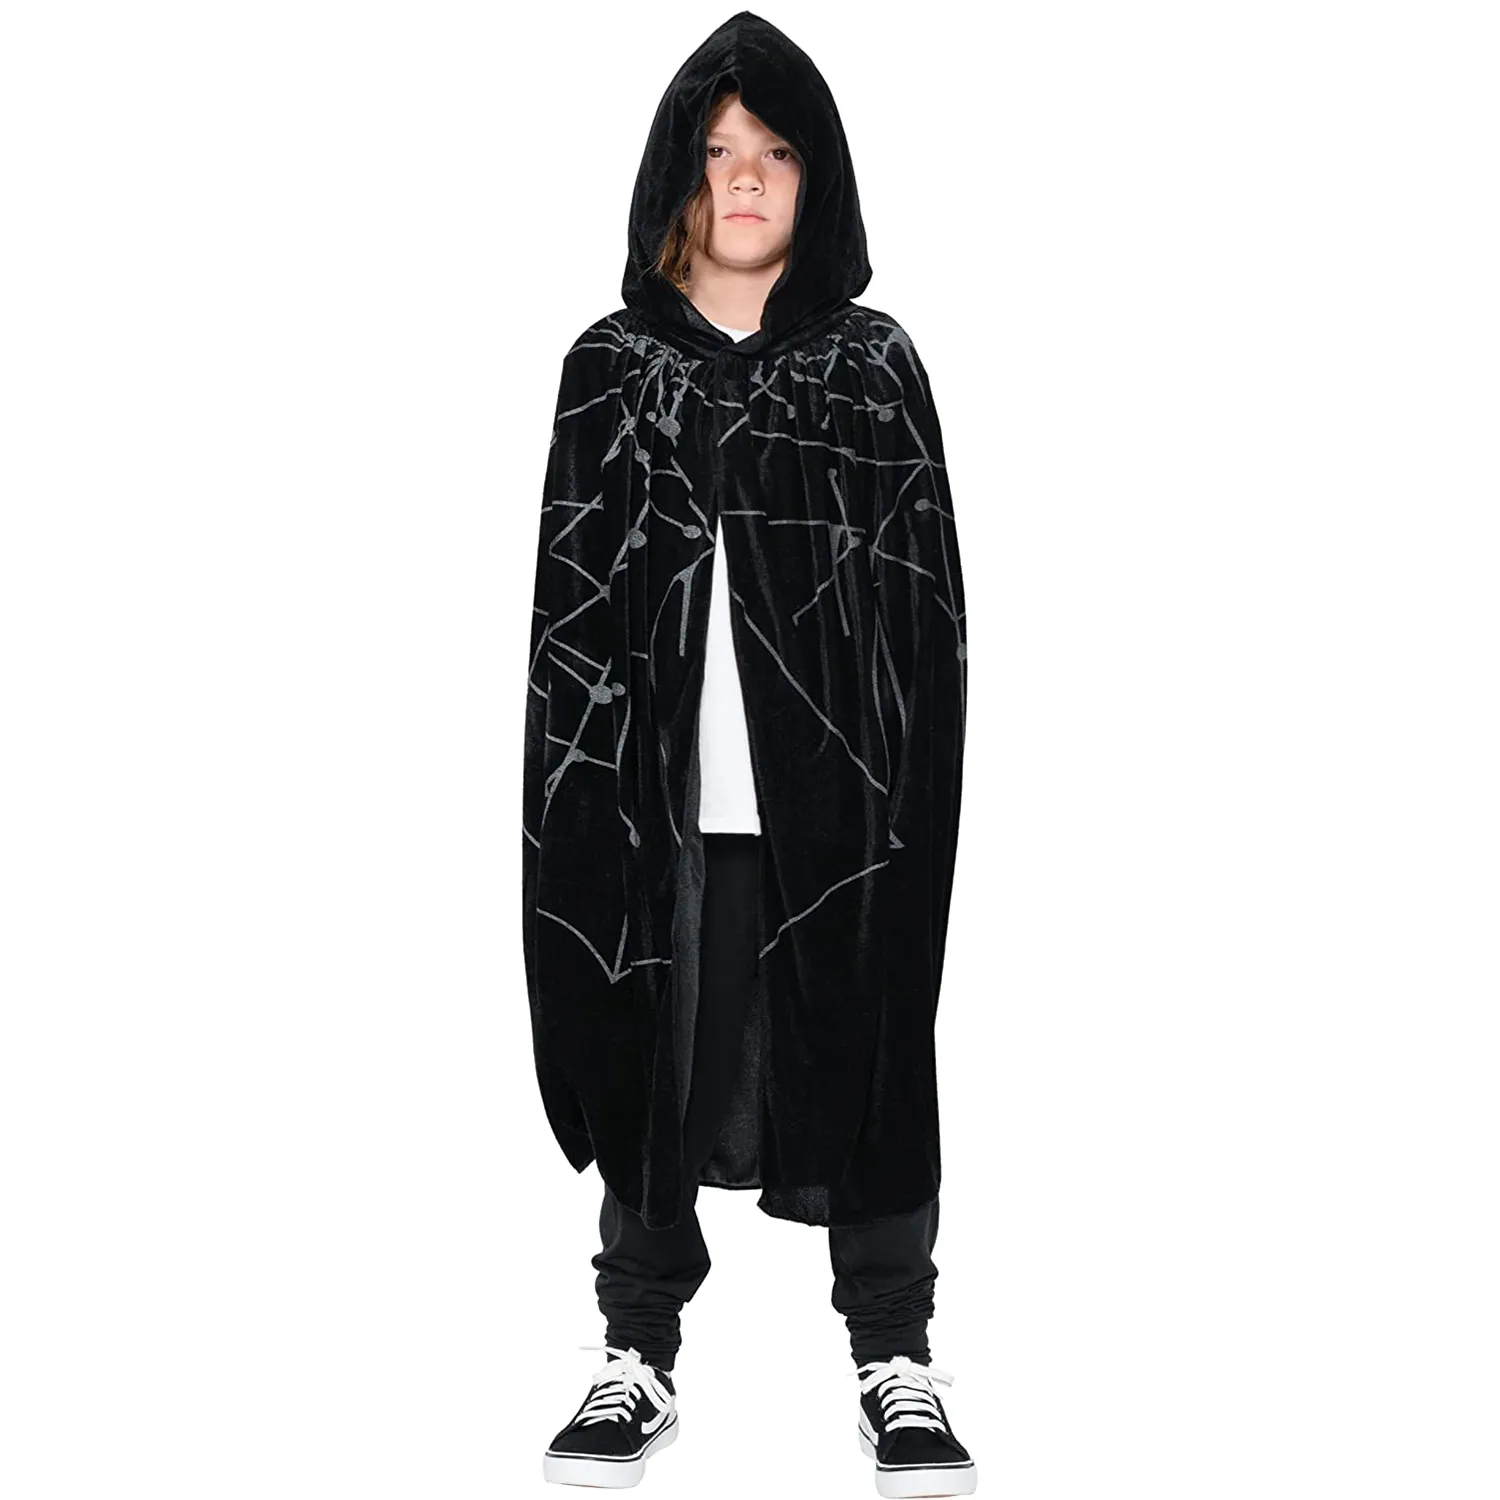 kids black hooded cloak